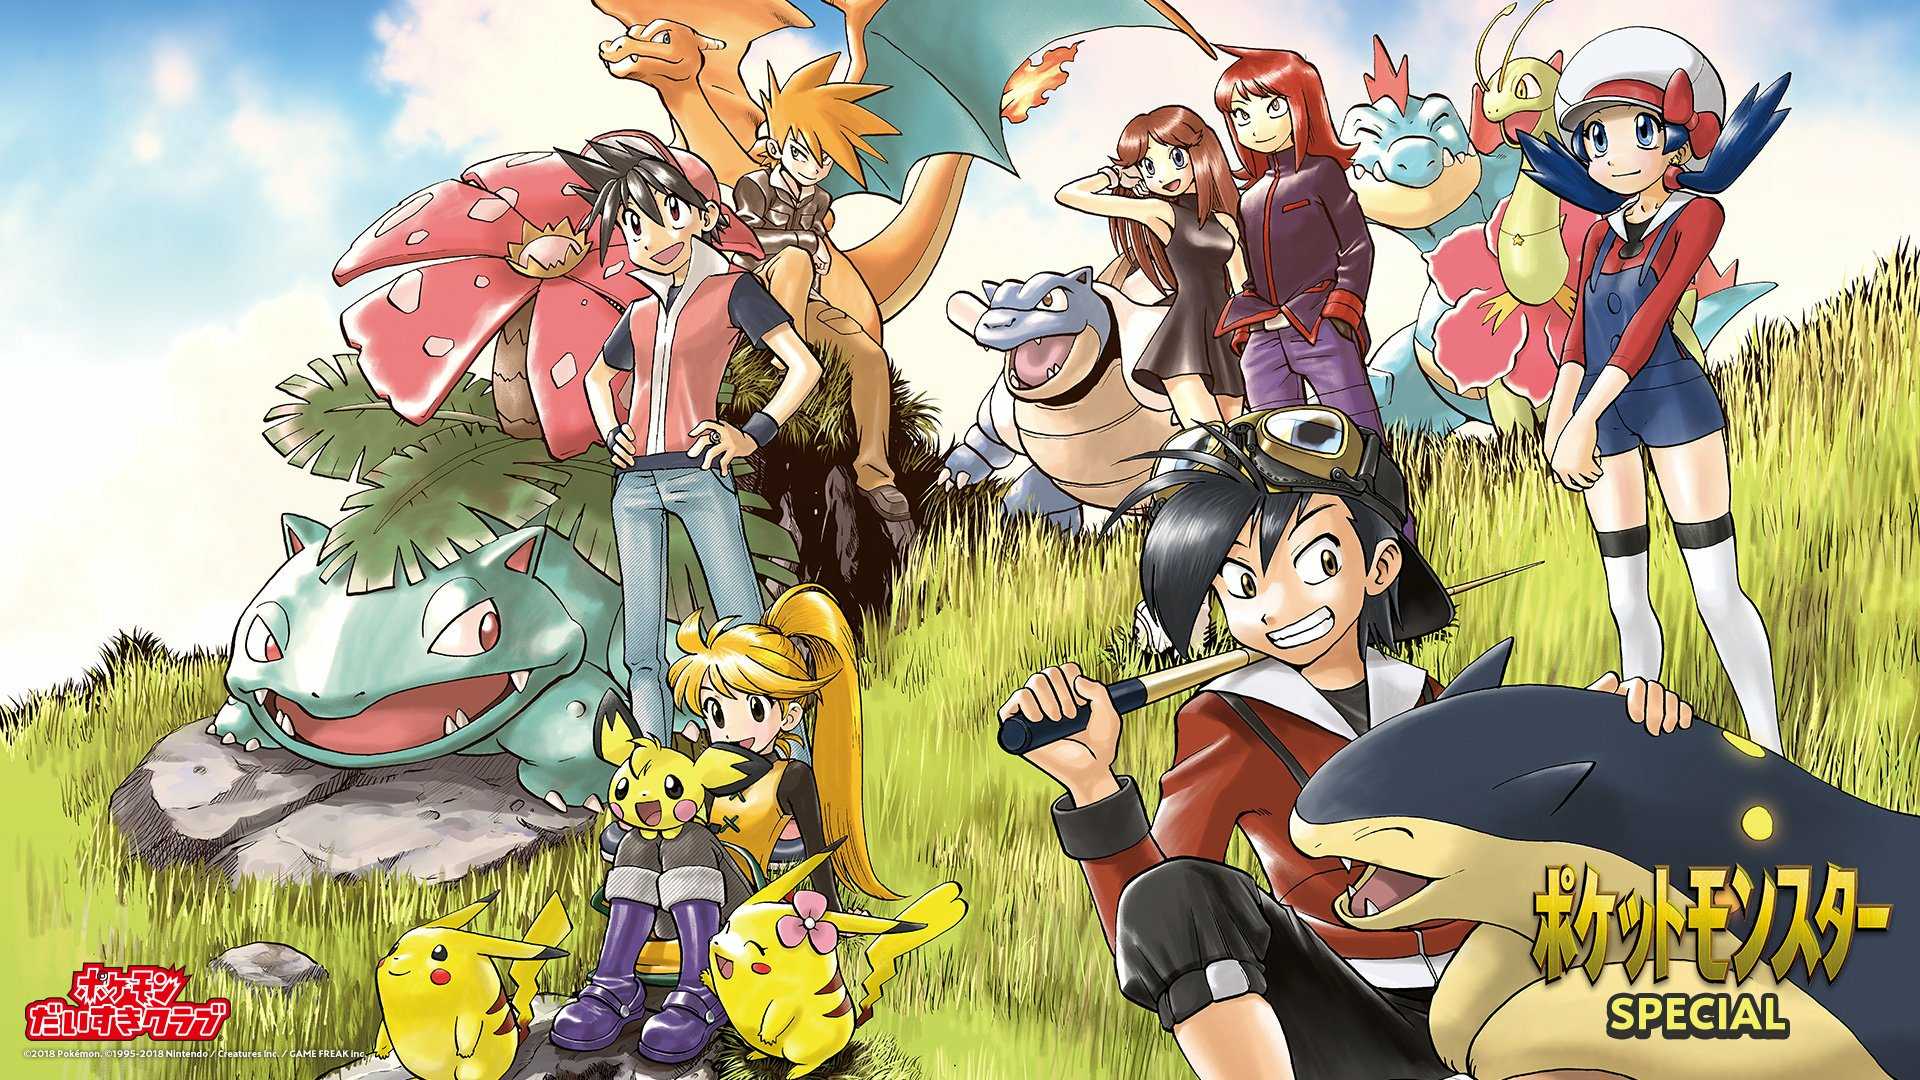 Pokémon Adventures se anuncia en la web oficial japonesa de Pokémon